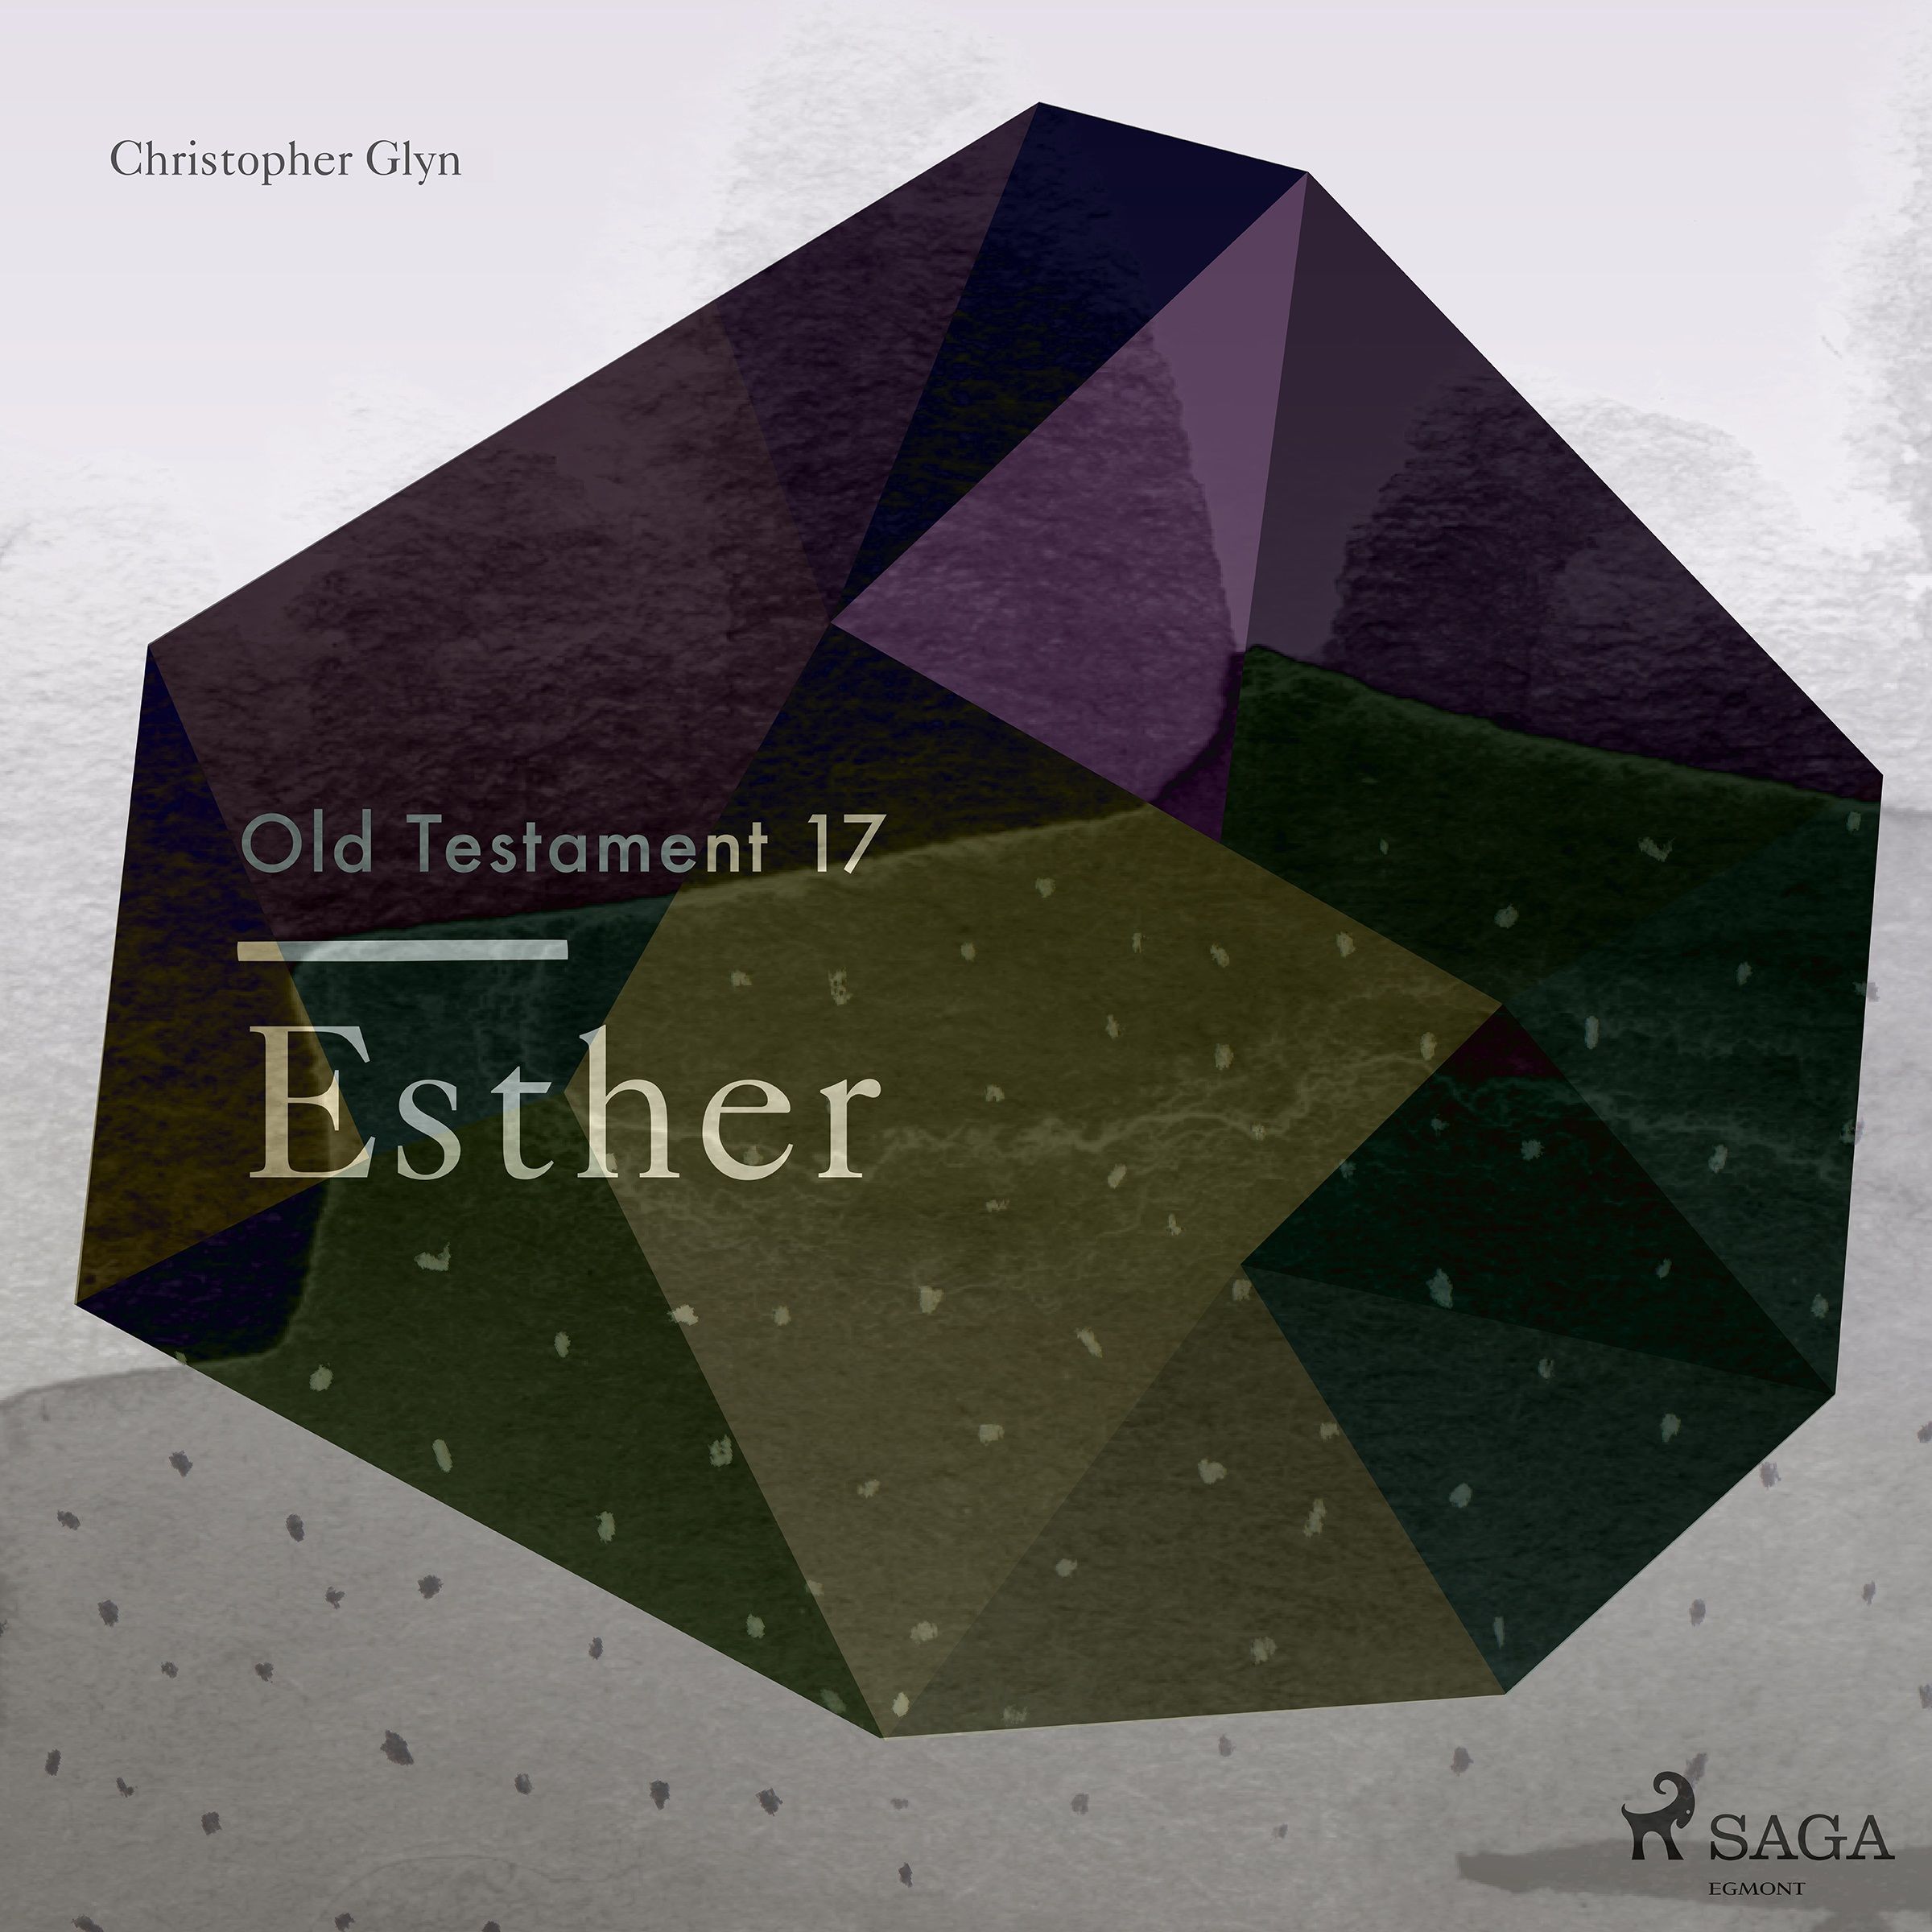 The Old Testament 17 - Esther, ljudbok av Christopher Glyn